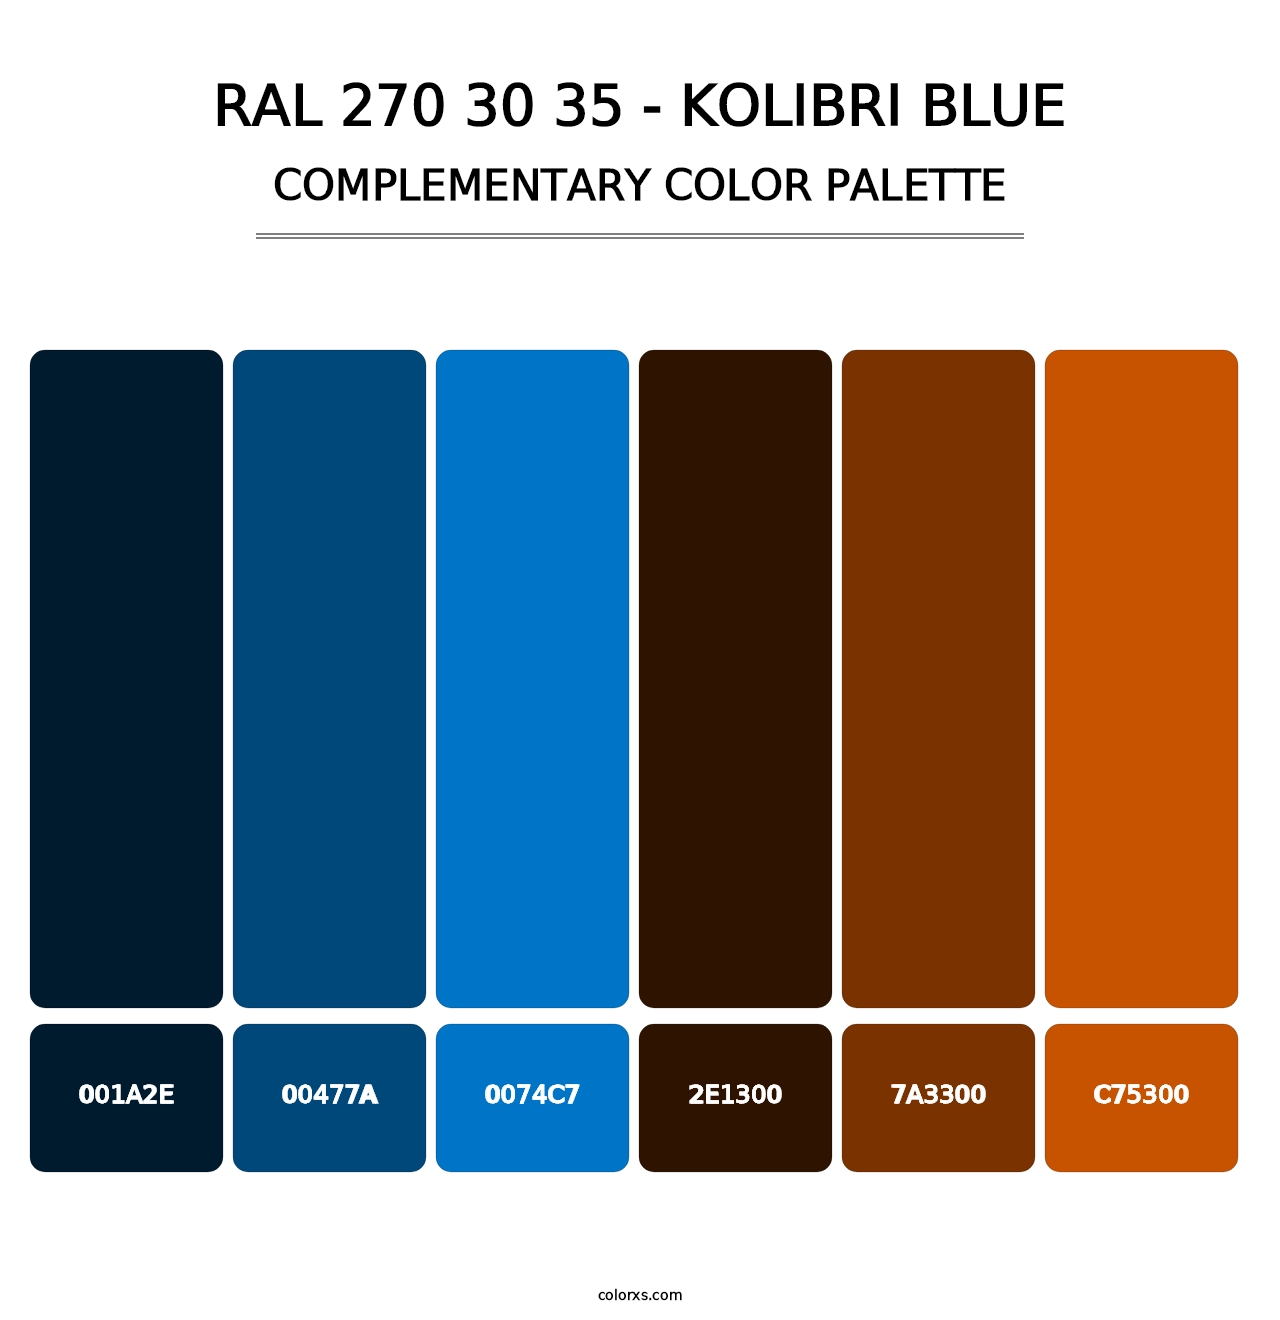 RAL 270 30 35 - Kolibri Blue - Complementary Color Palette